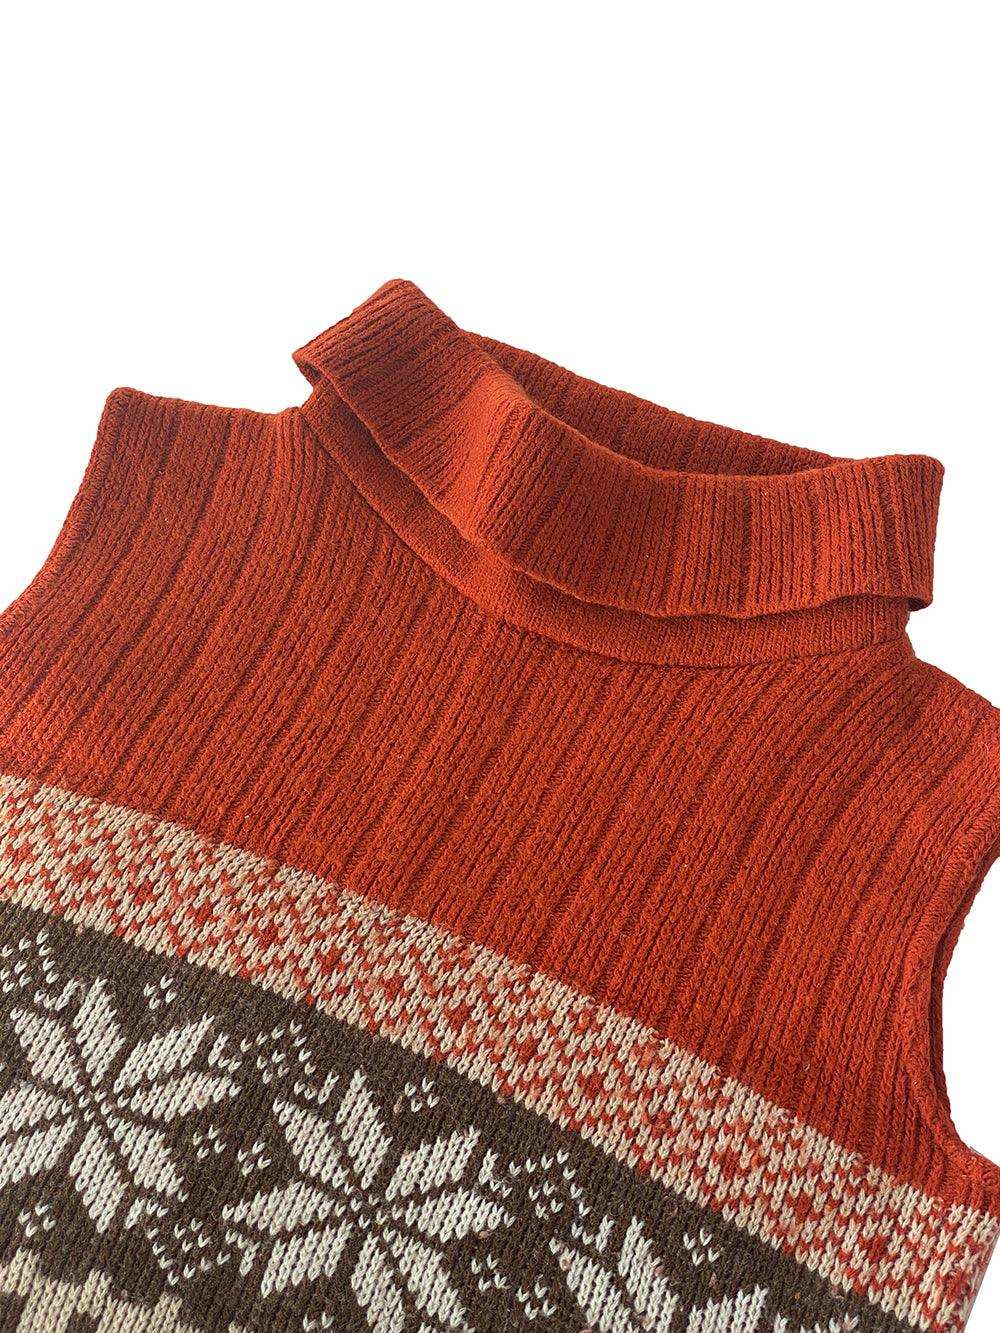 Vintage Knitted Sweater Vest